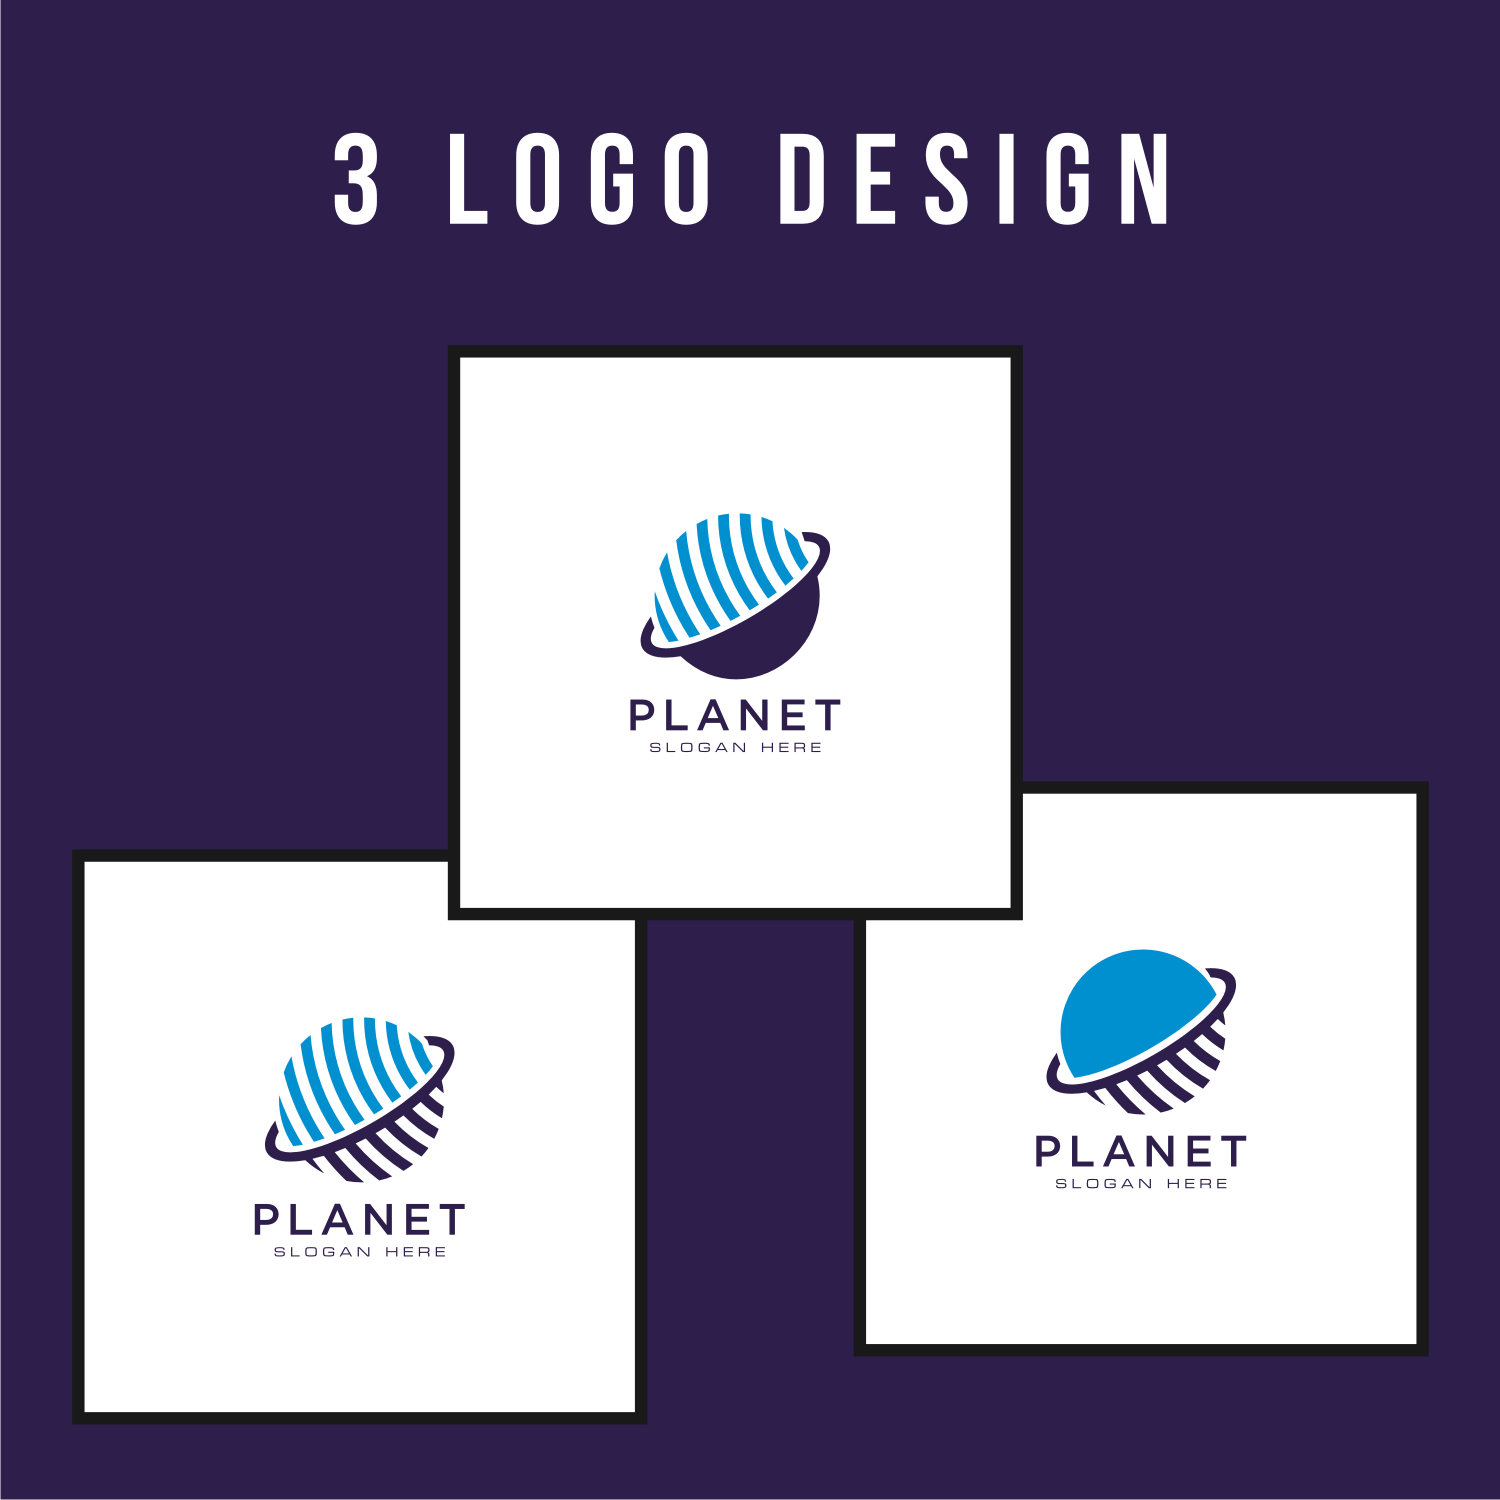 Creative Planet Orbit Abstract Logo Design cover image.